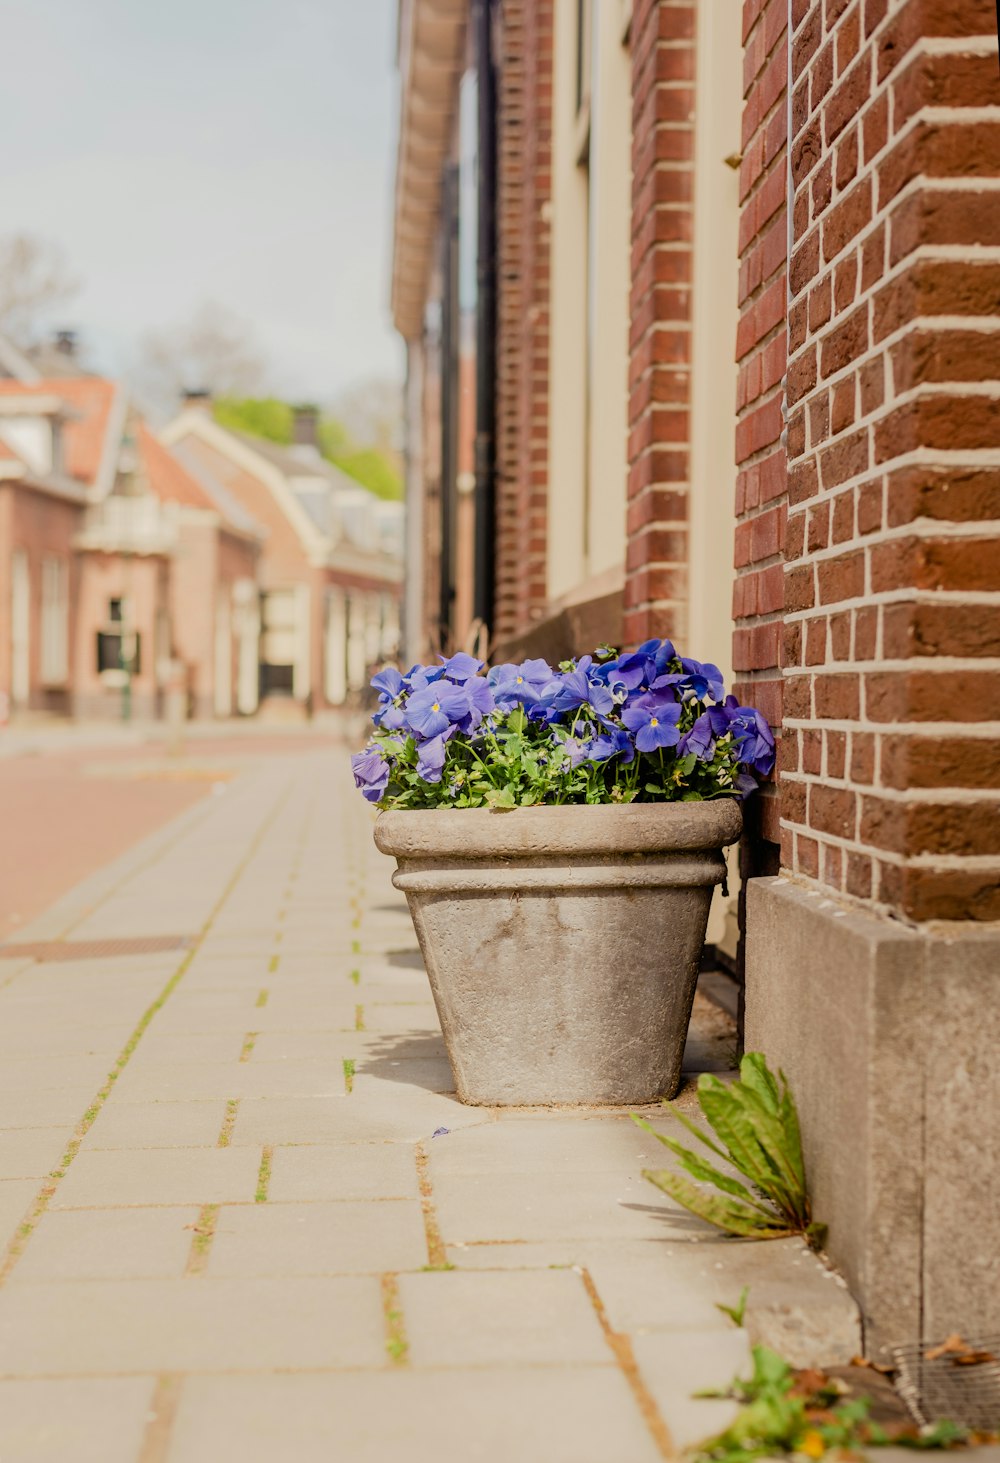 a pot of flowers on a sidewalk